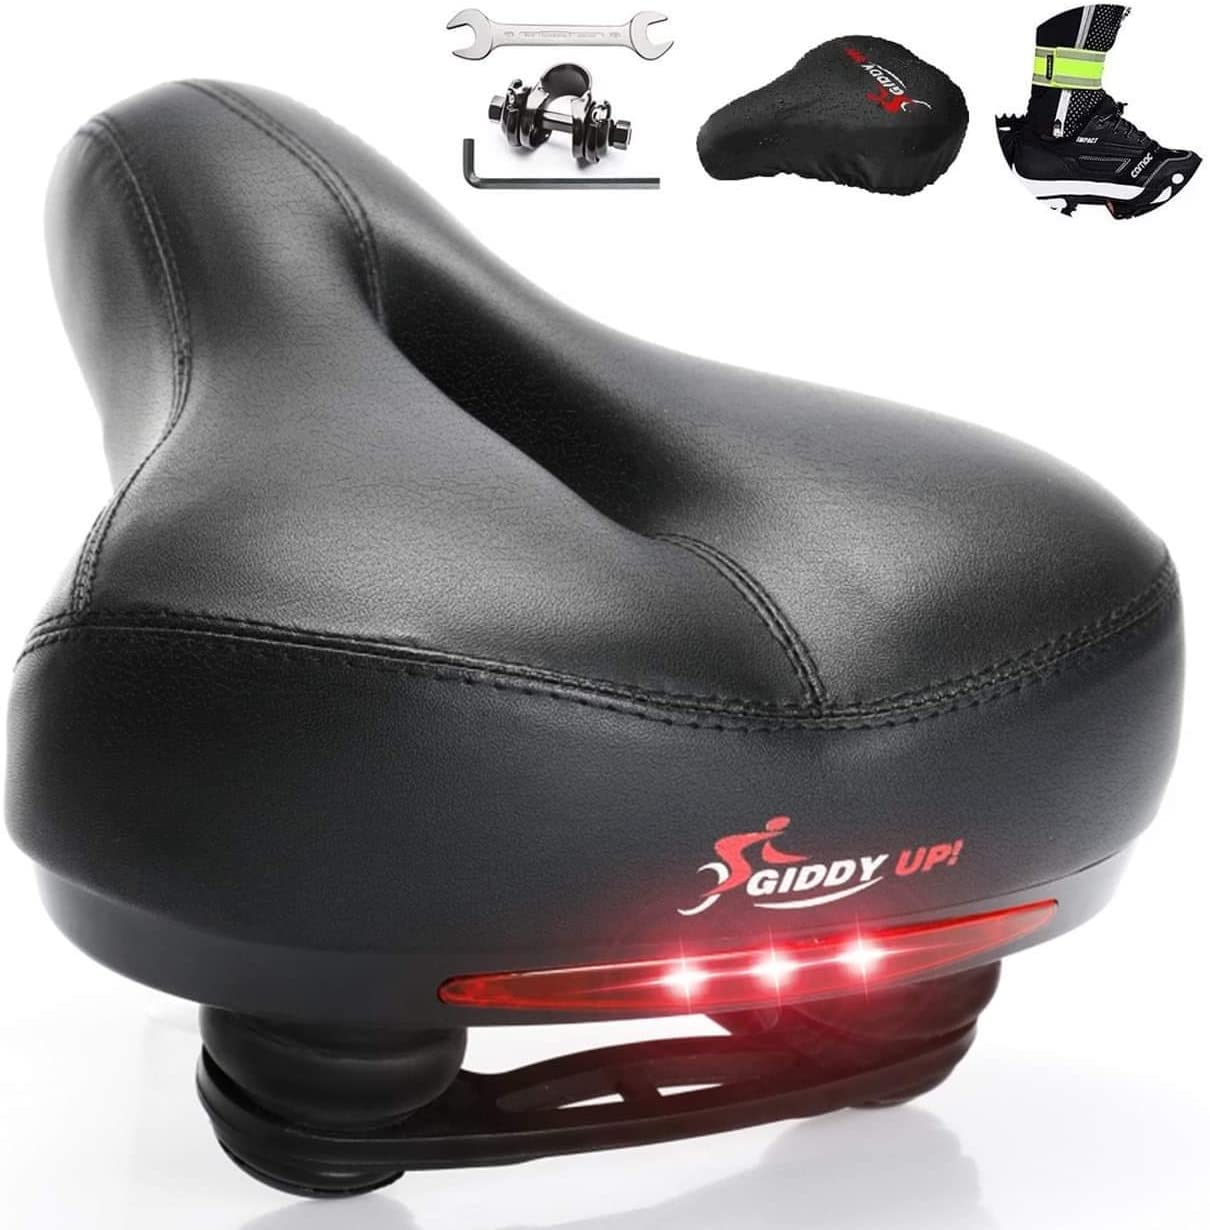 Roguoo Bike Seat Most Comfortable Bicycle Seat Dual Shock Absorbing Memory Foam 